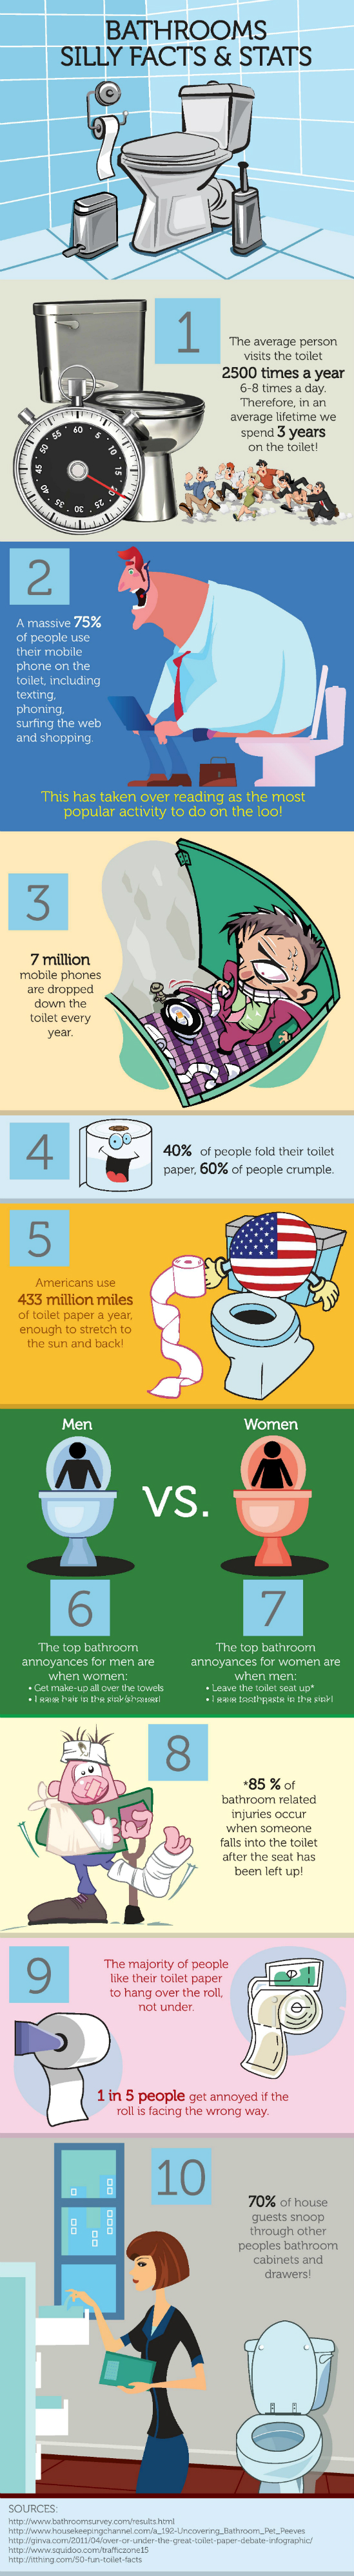 bathroom_infographic_design.jpg